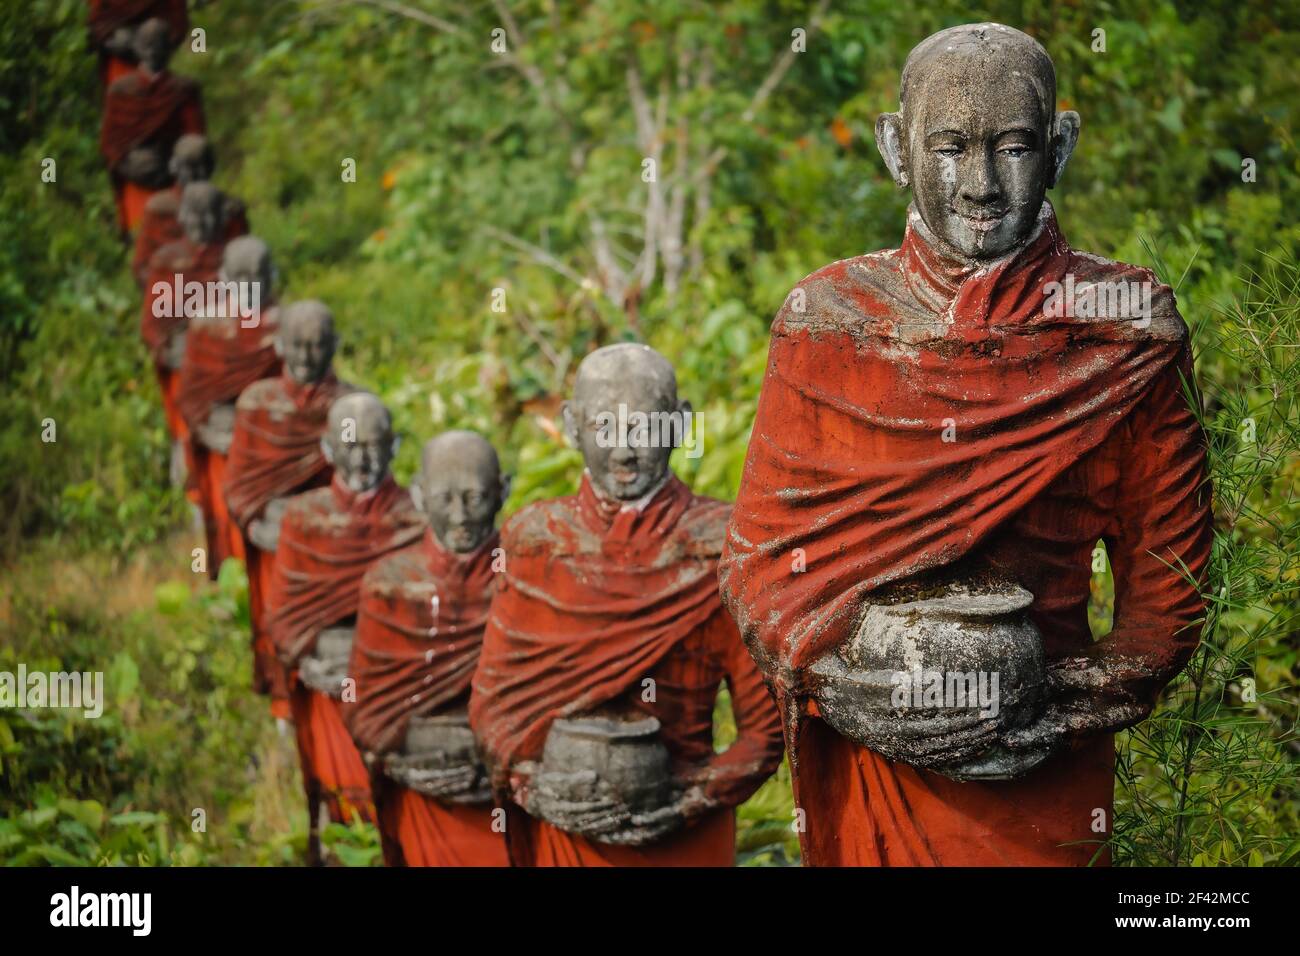 Hundreds of old statues of Buddhist monks collecting alms surround the Win Sein Taw Ya Buddha in Mawlamyine, Myanmar (Burma). Stock Photo